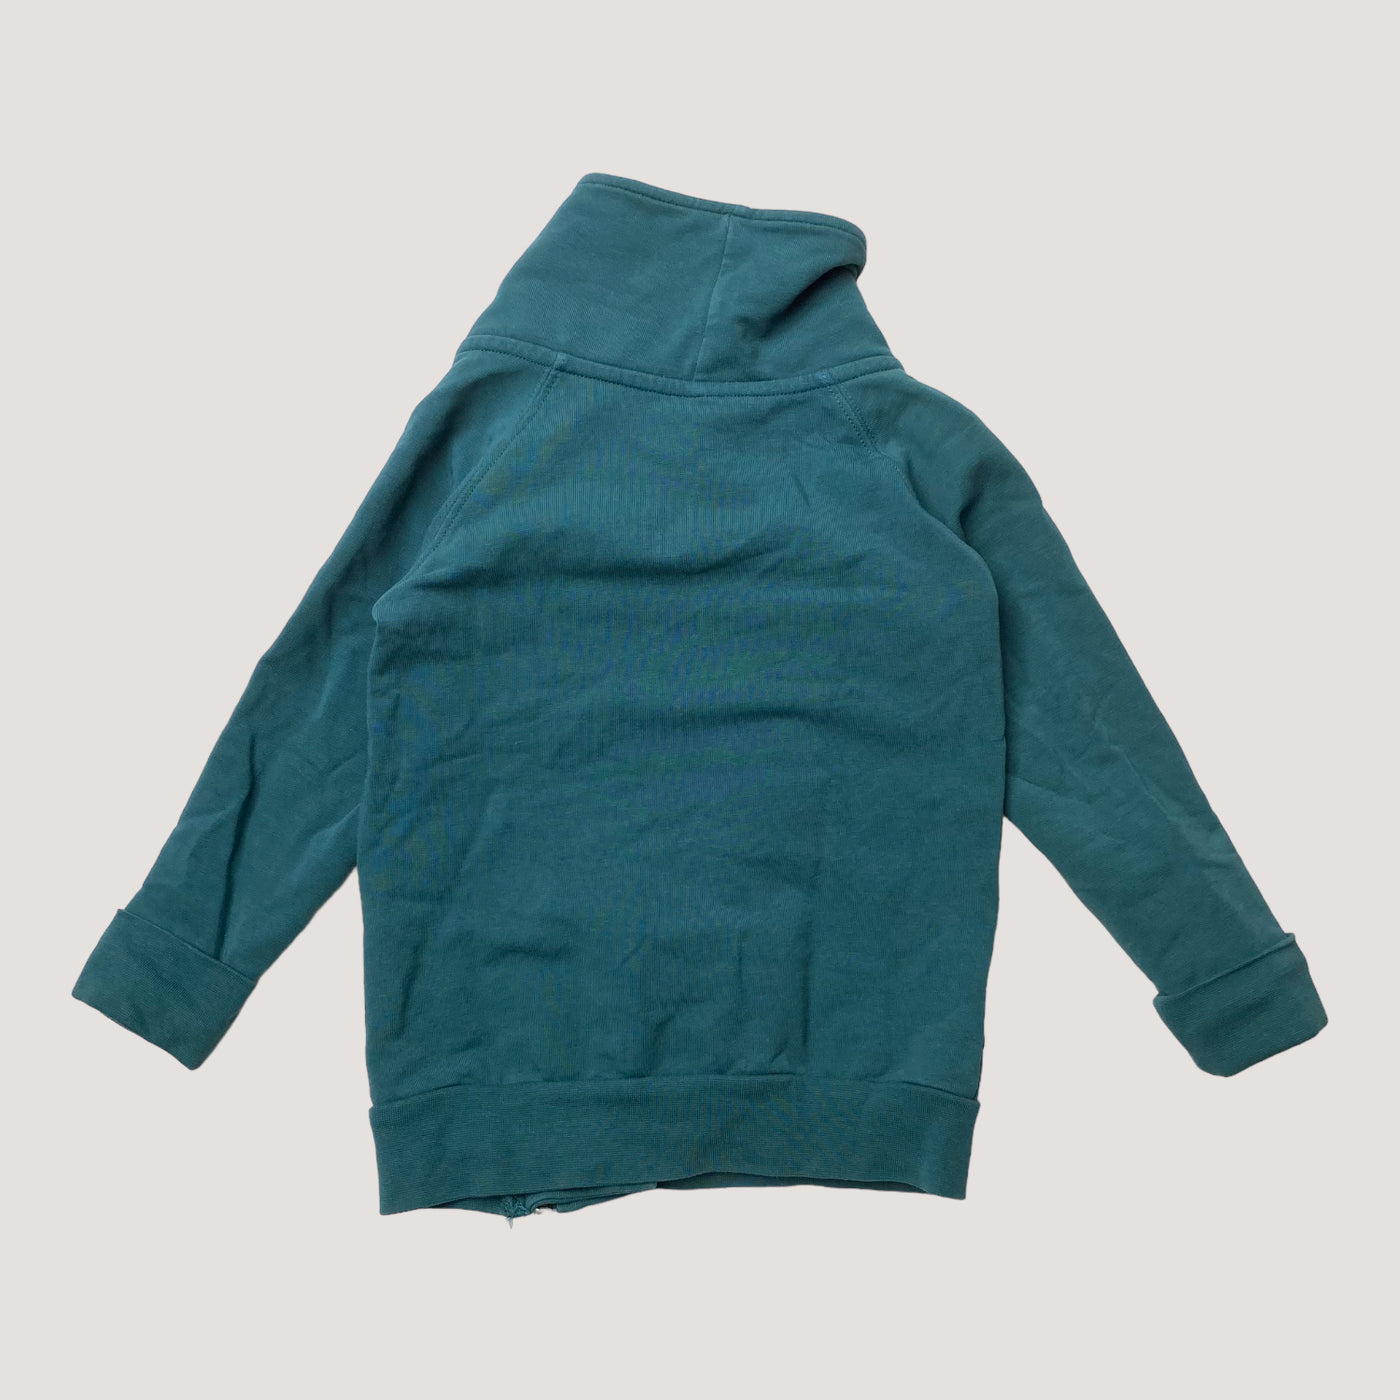 Blaa sweat jacket, hunter green | 86/92cm